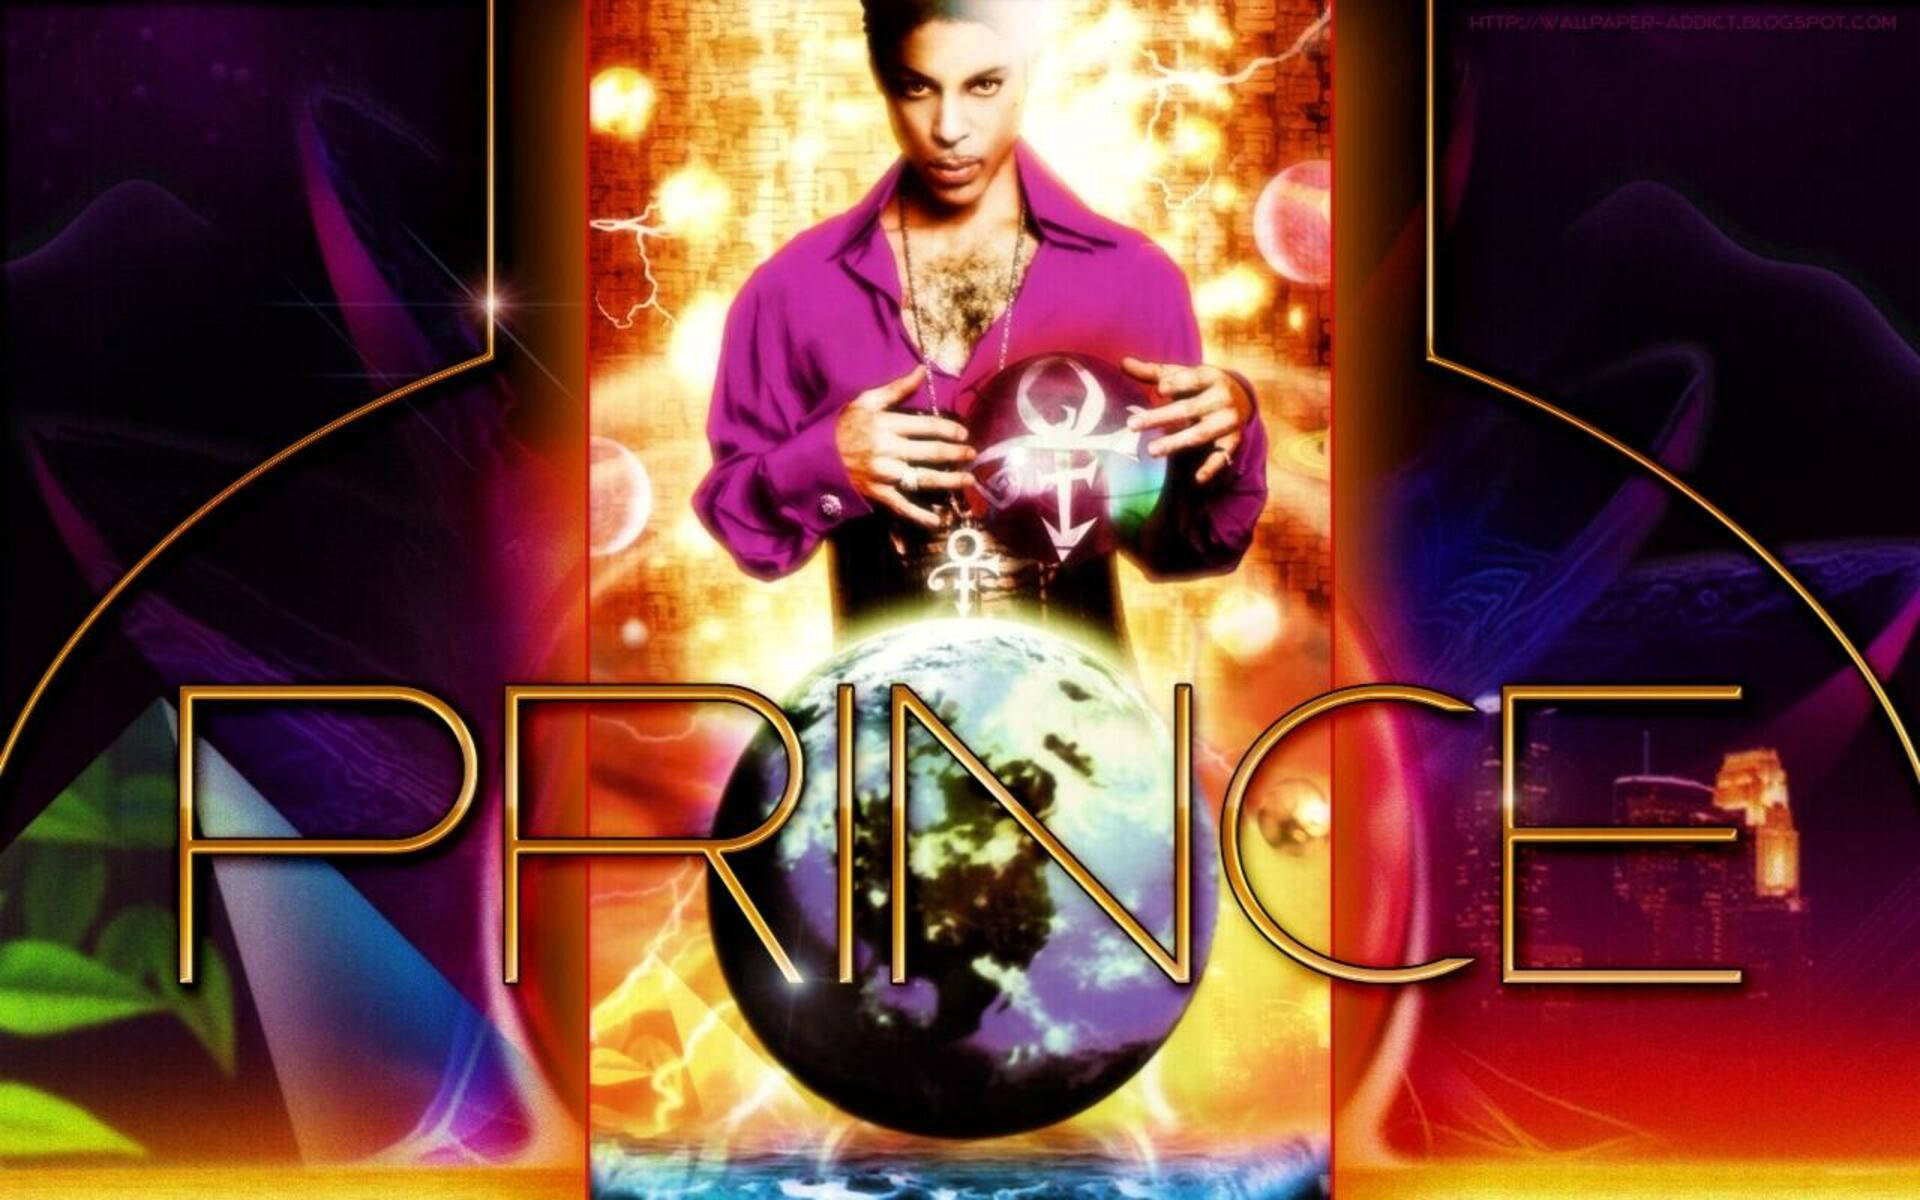 Prince Colorful Digital Art